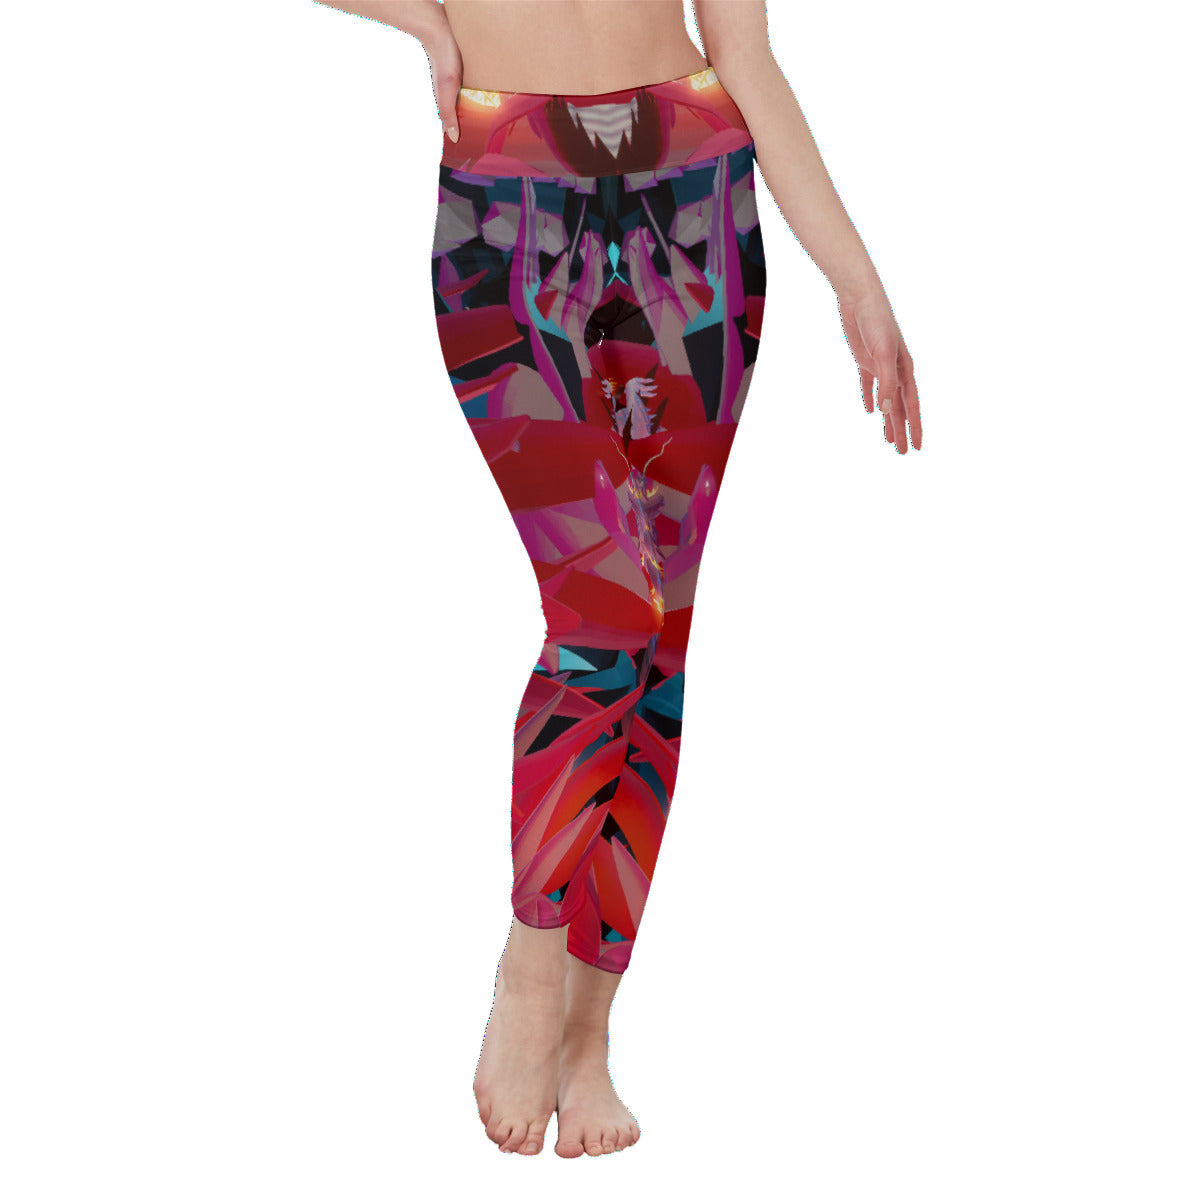 Psychedelic Lotus Dragon Digital Art Print Women's High Waist Leggings | Side Stitch Closure